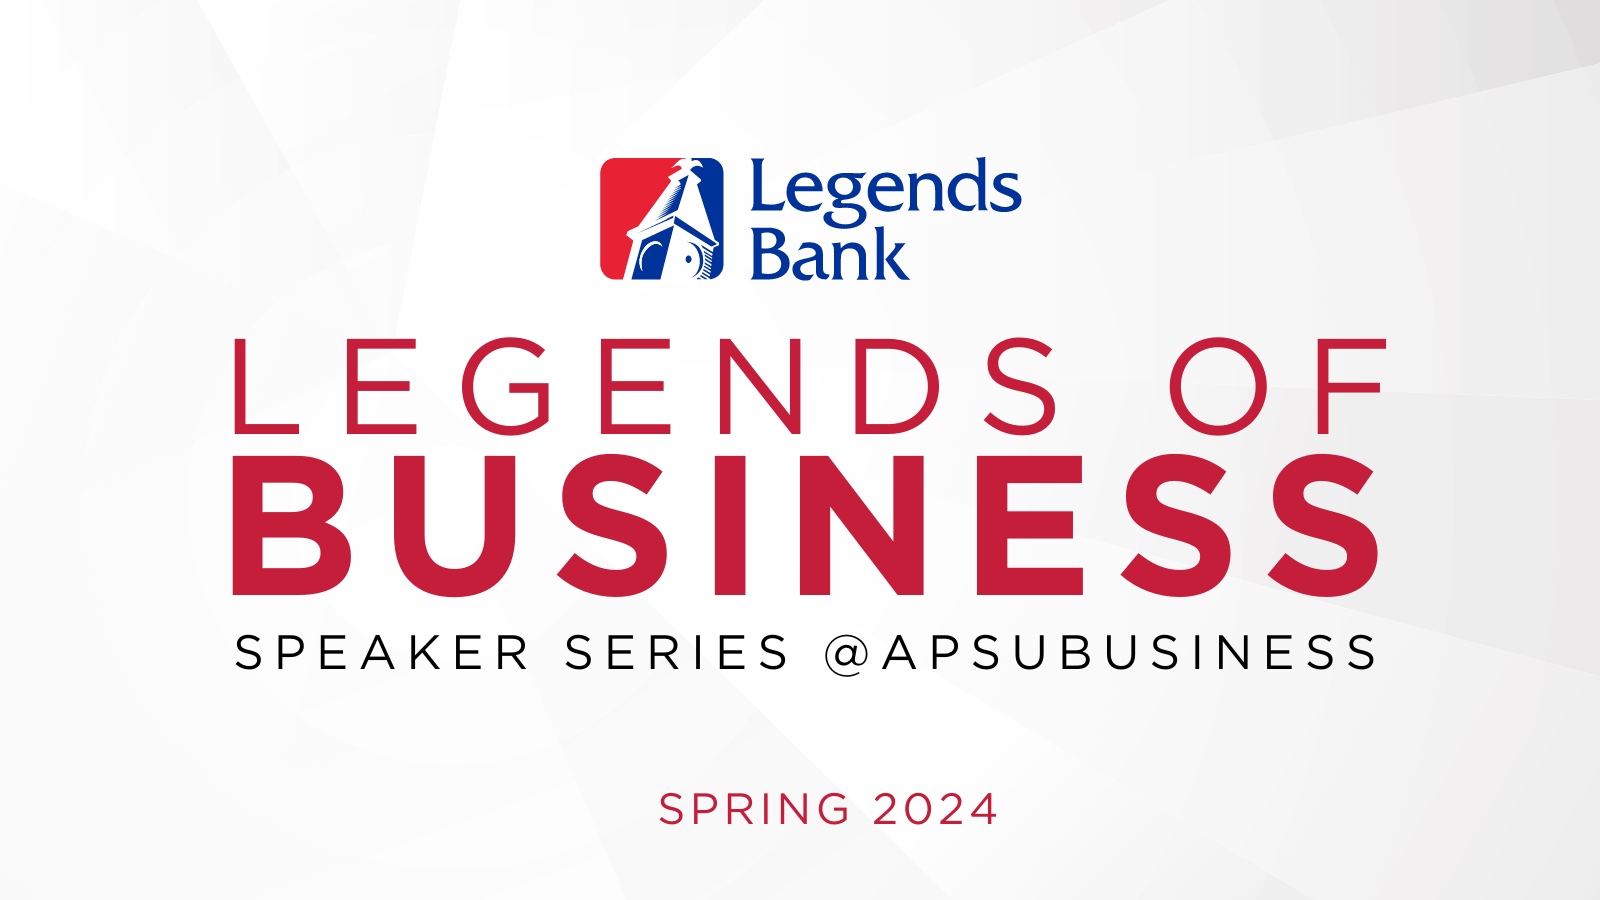 Legends of Business Speaker Series logo